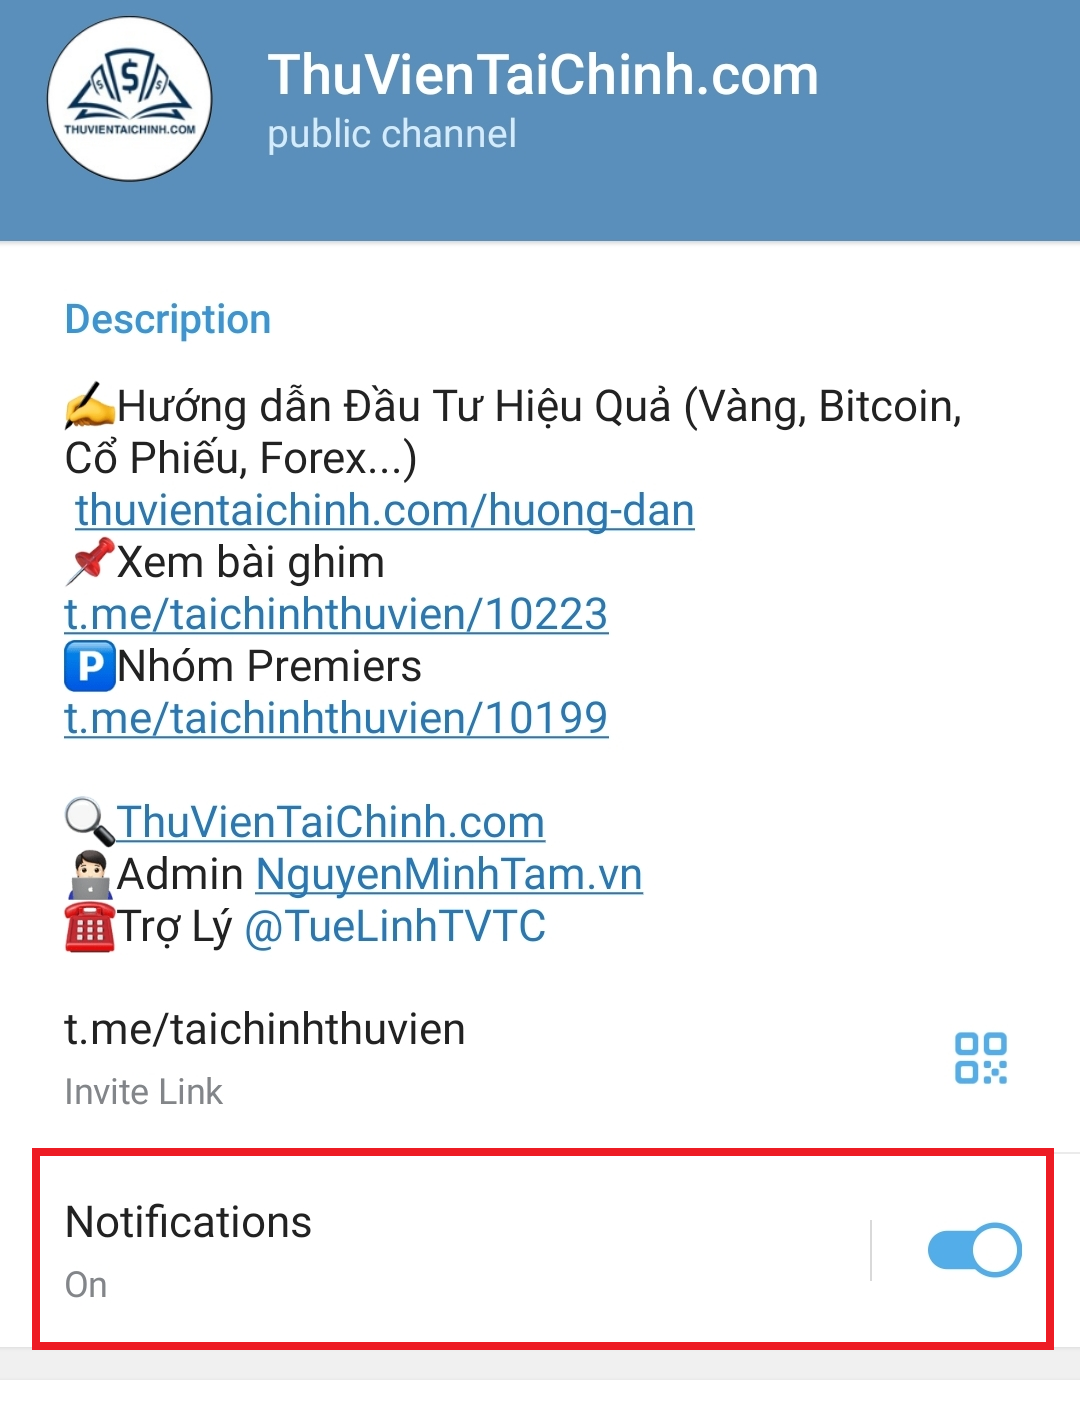 Cách tham gia nhóm Telegram ThuVienTaiChinh.com